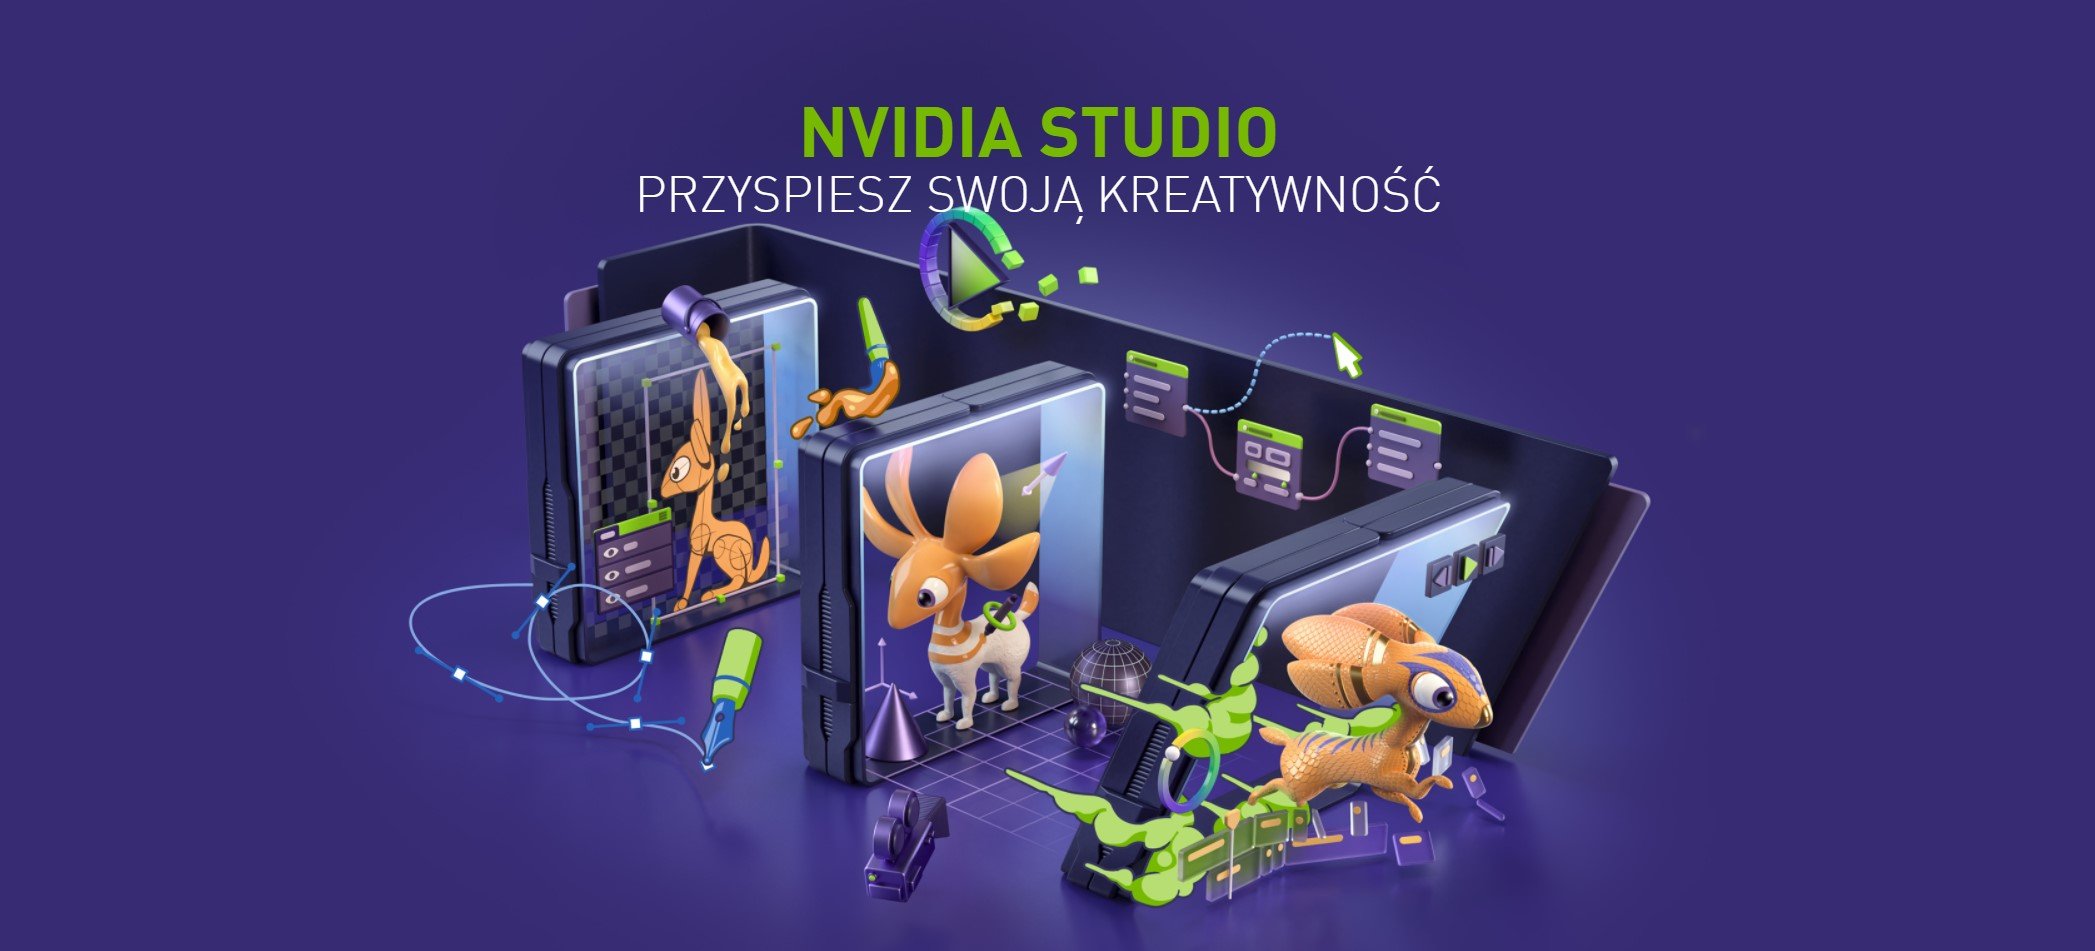 NVIDIA Studio